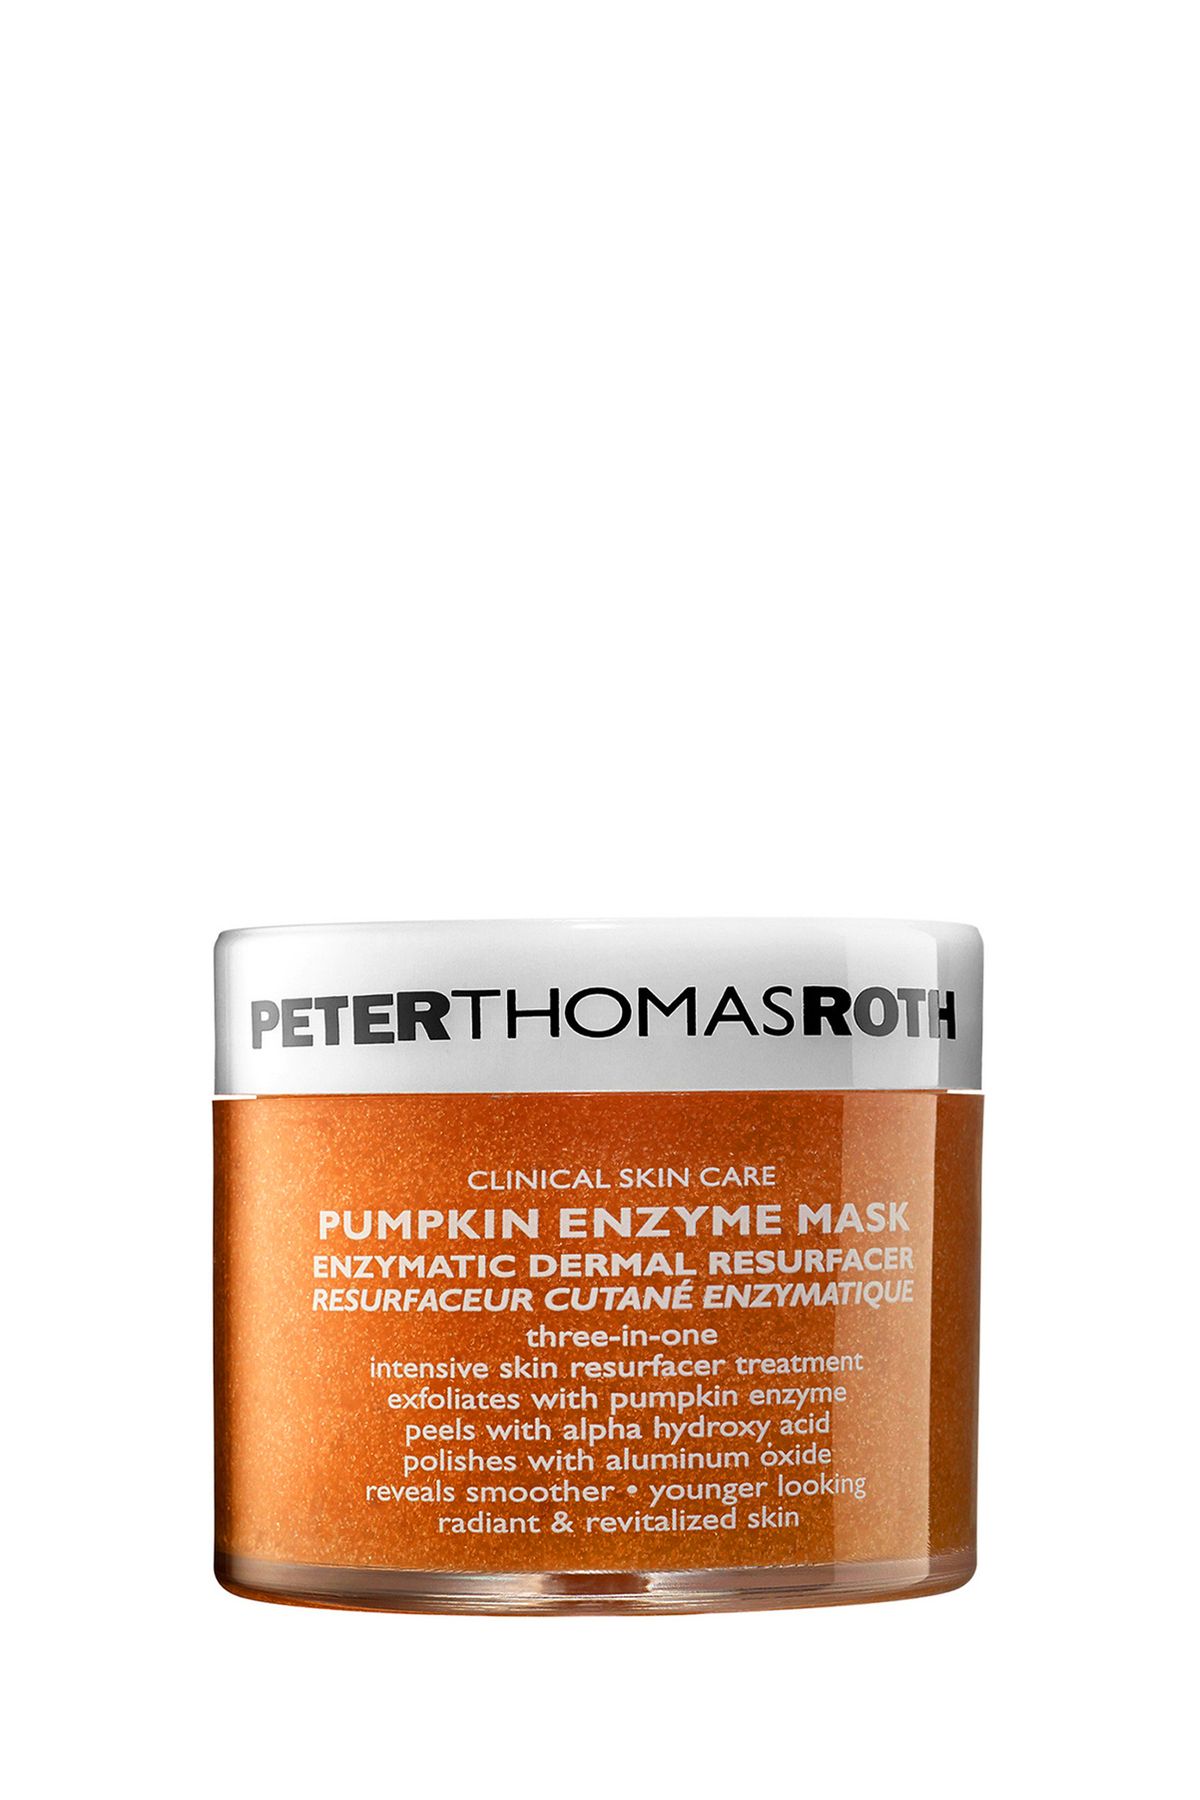 PETER THOMAS ROTH Peter Thomasroth Pumpkin Enzyme Mask 150 ml